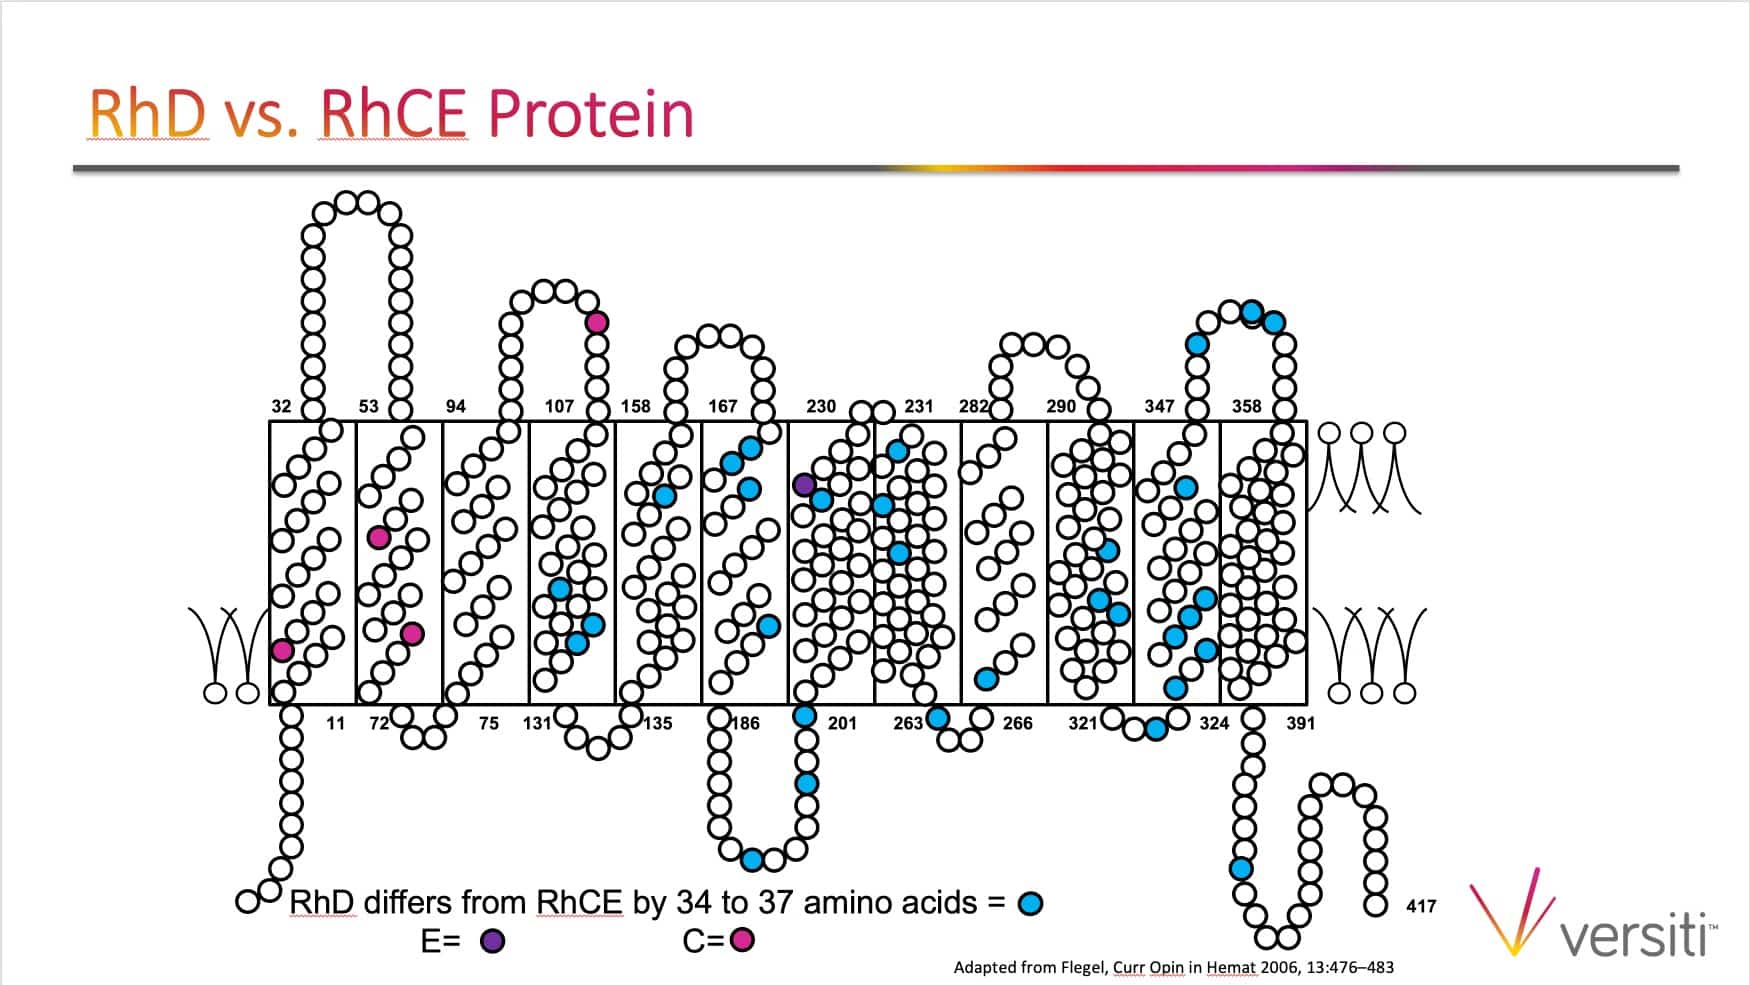 Slide 2: Comparison of RhD and RhCE proteins